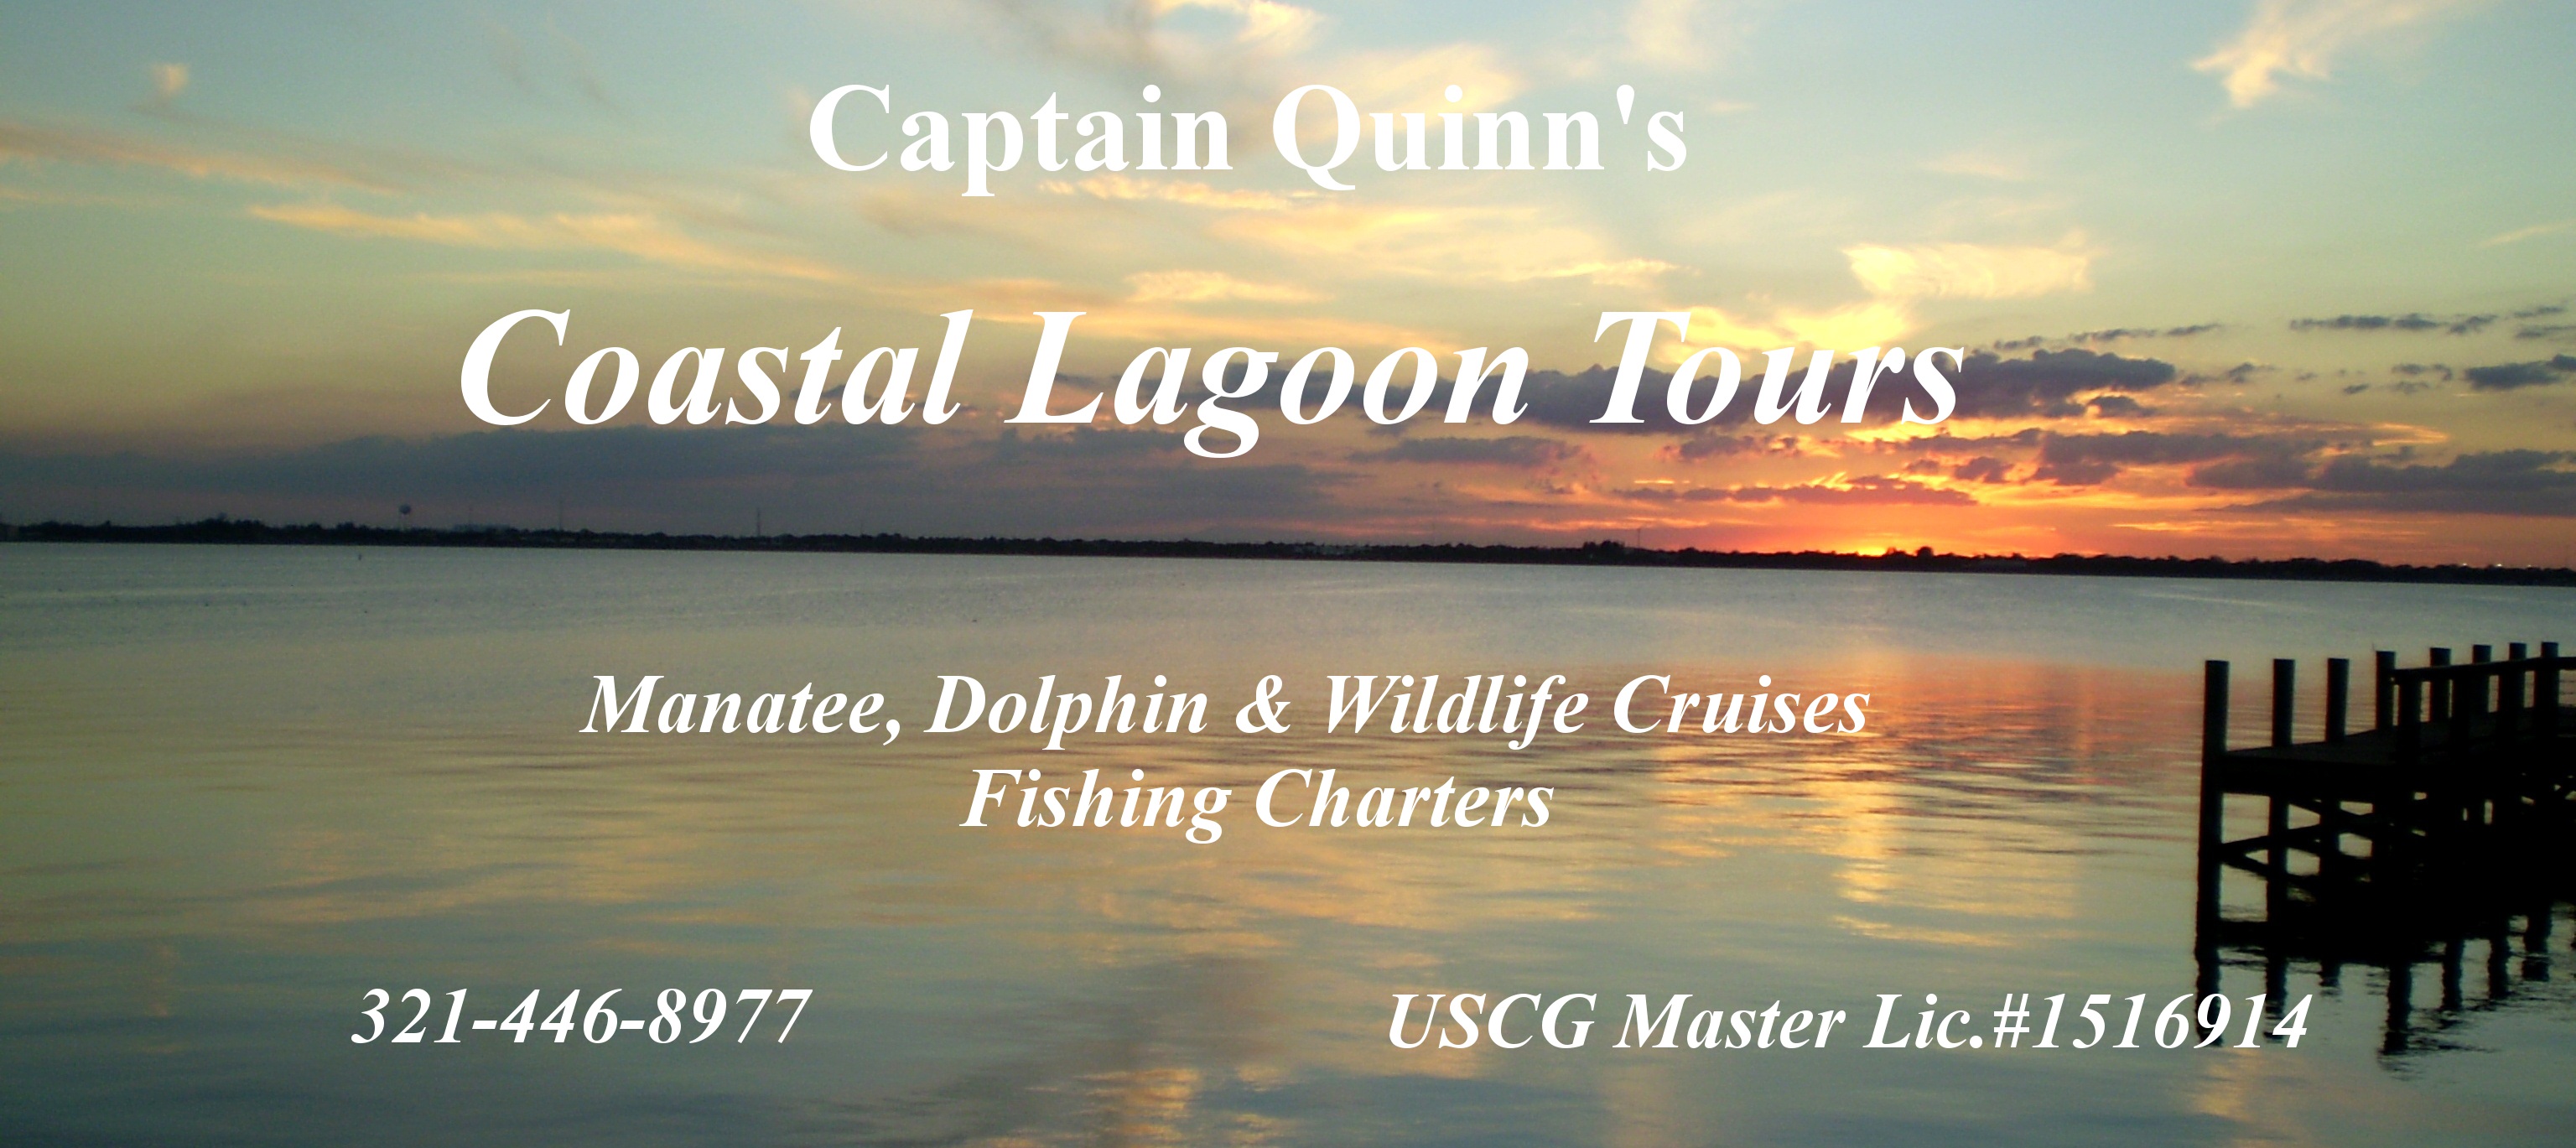 Coastal Lagoon Tours 321-446-8977 Kelly Park 2550 N Banana River Drive, Merrit Island, Florida 32952 to see Manatee, Dolphin and Wildlife